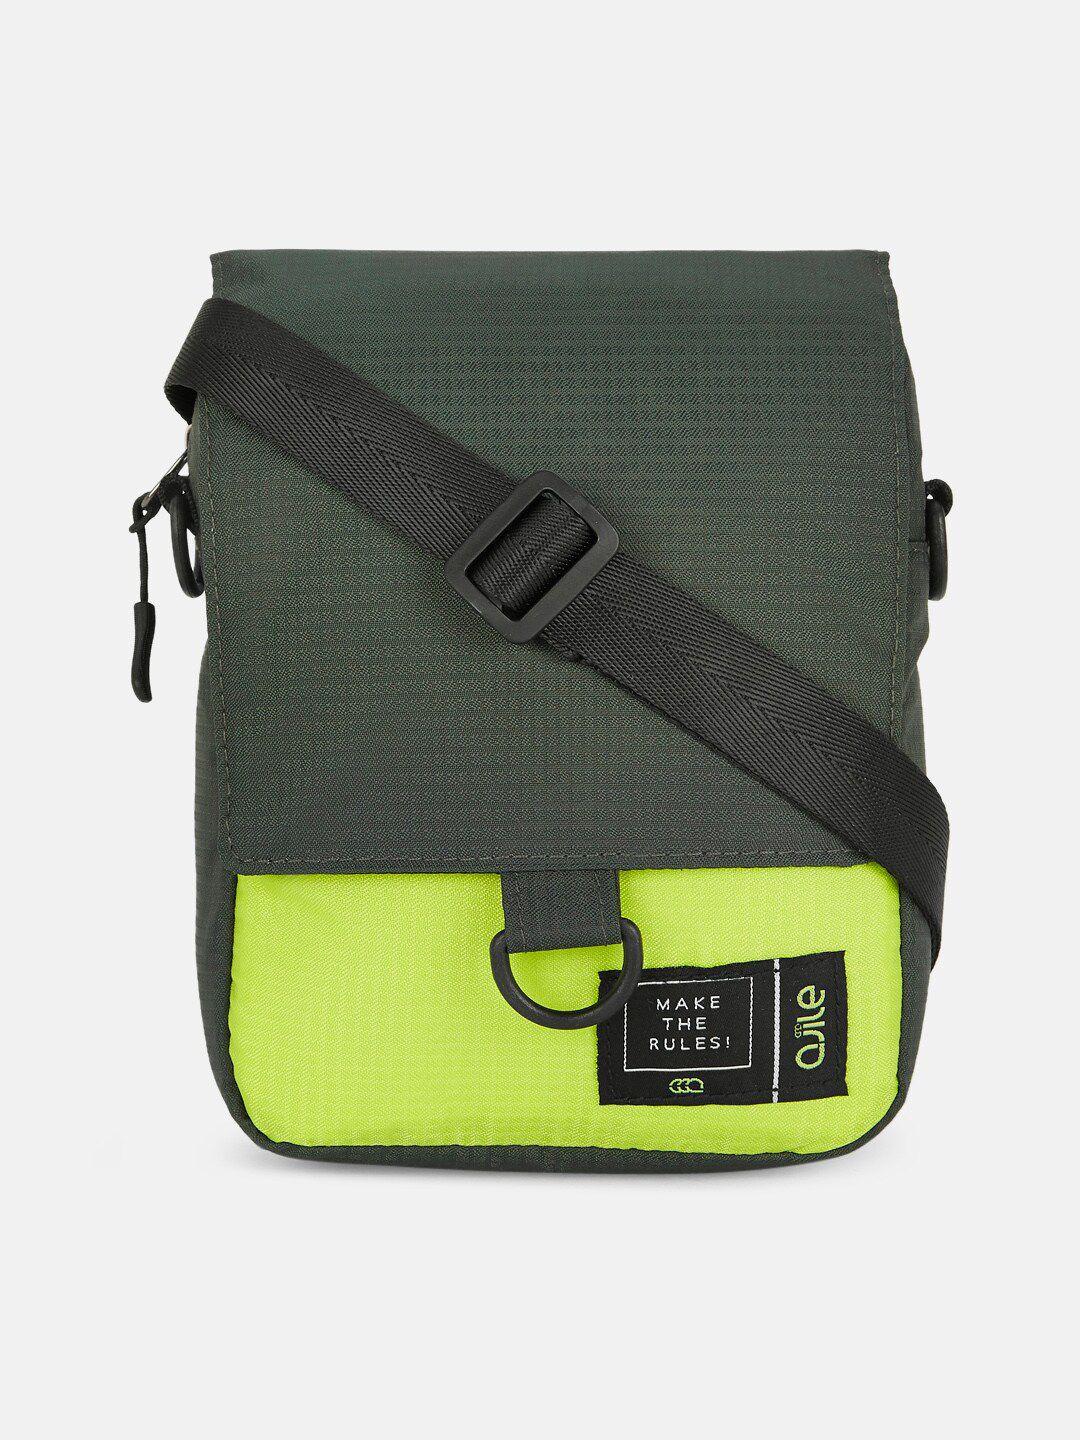 ajile by pantaloons men green & black colourblocked messenger bag